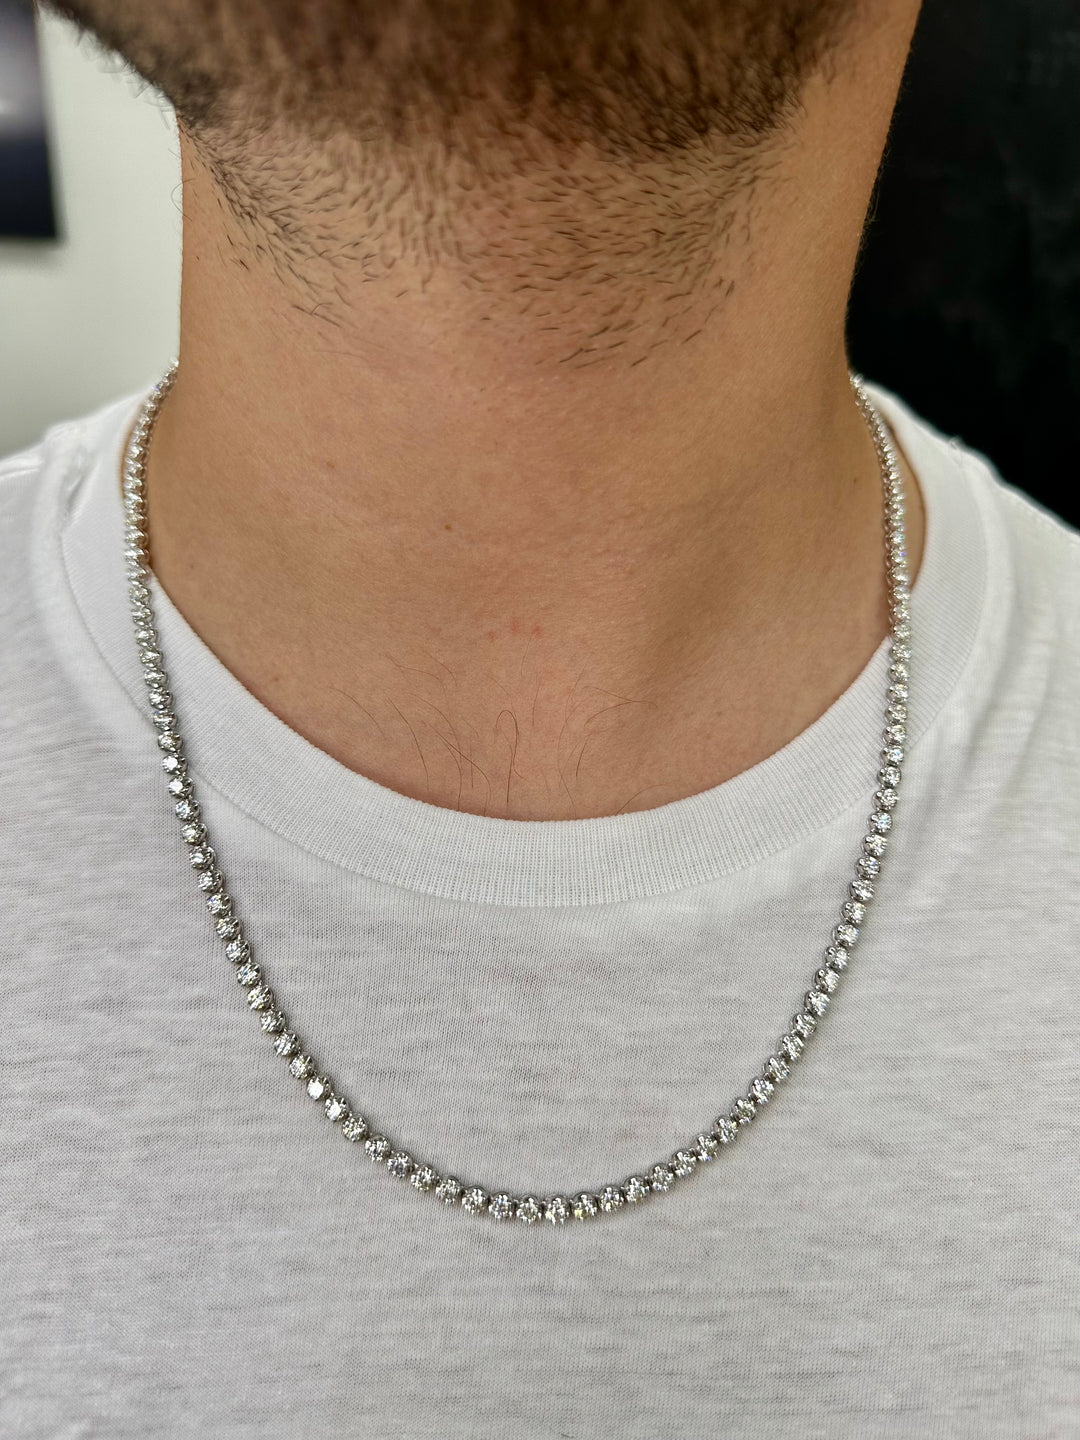 Meyul - 15 Carat Men's Diamond Tennis Necklace Chain